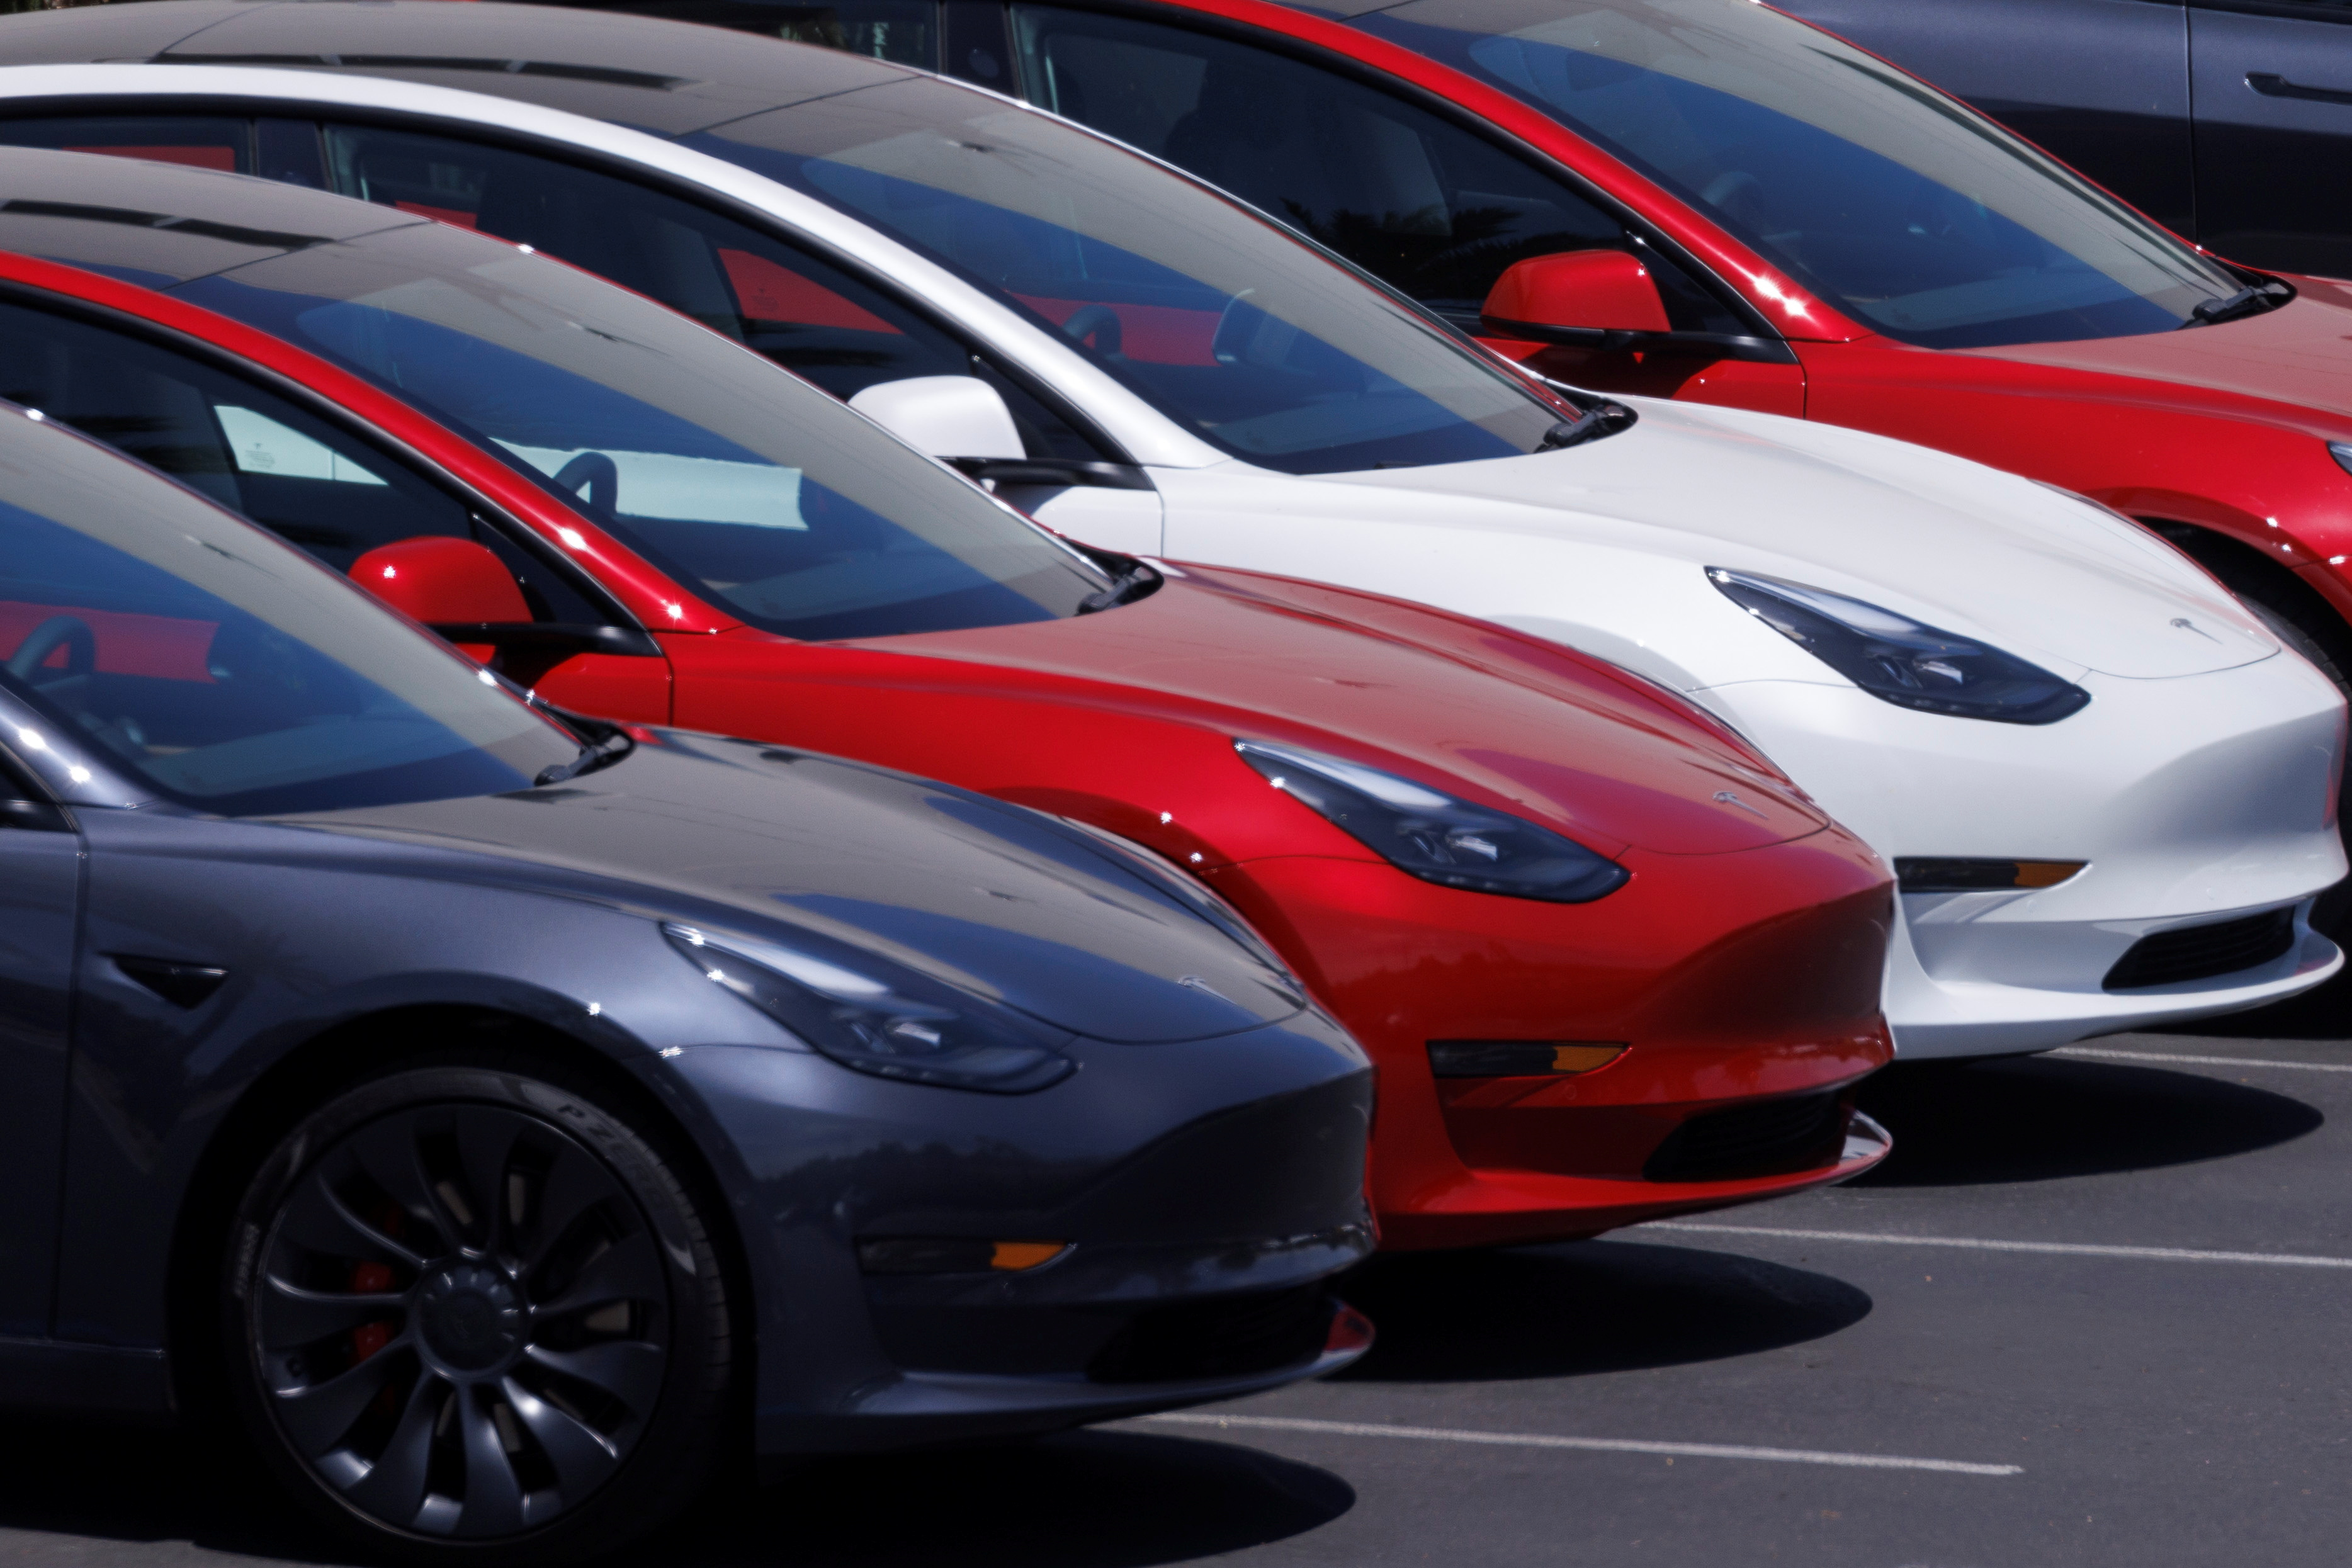 Tesla vehicles in Vista, California